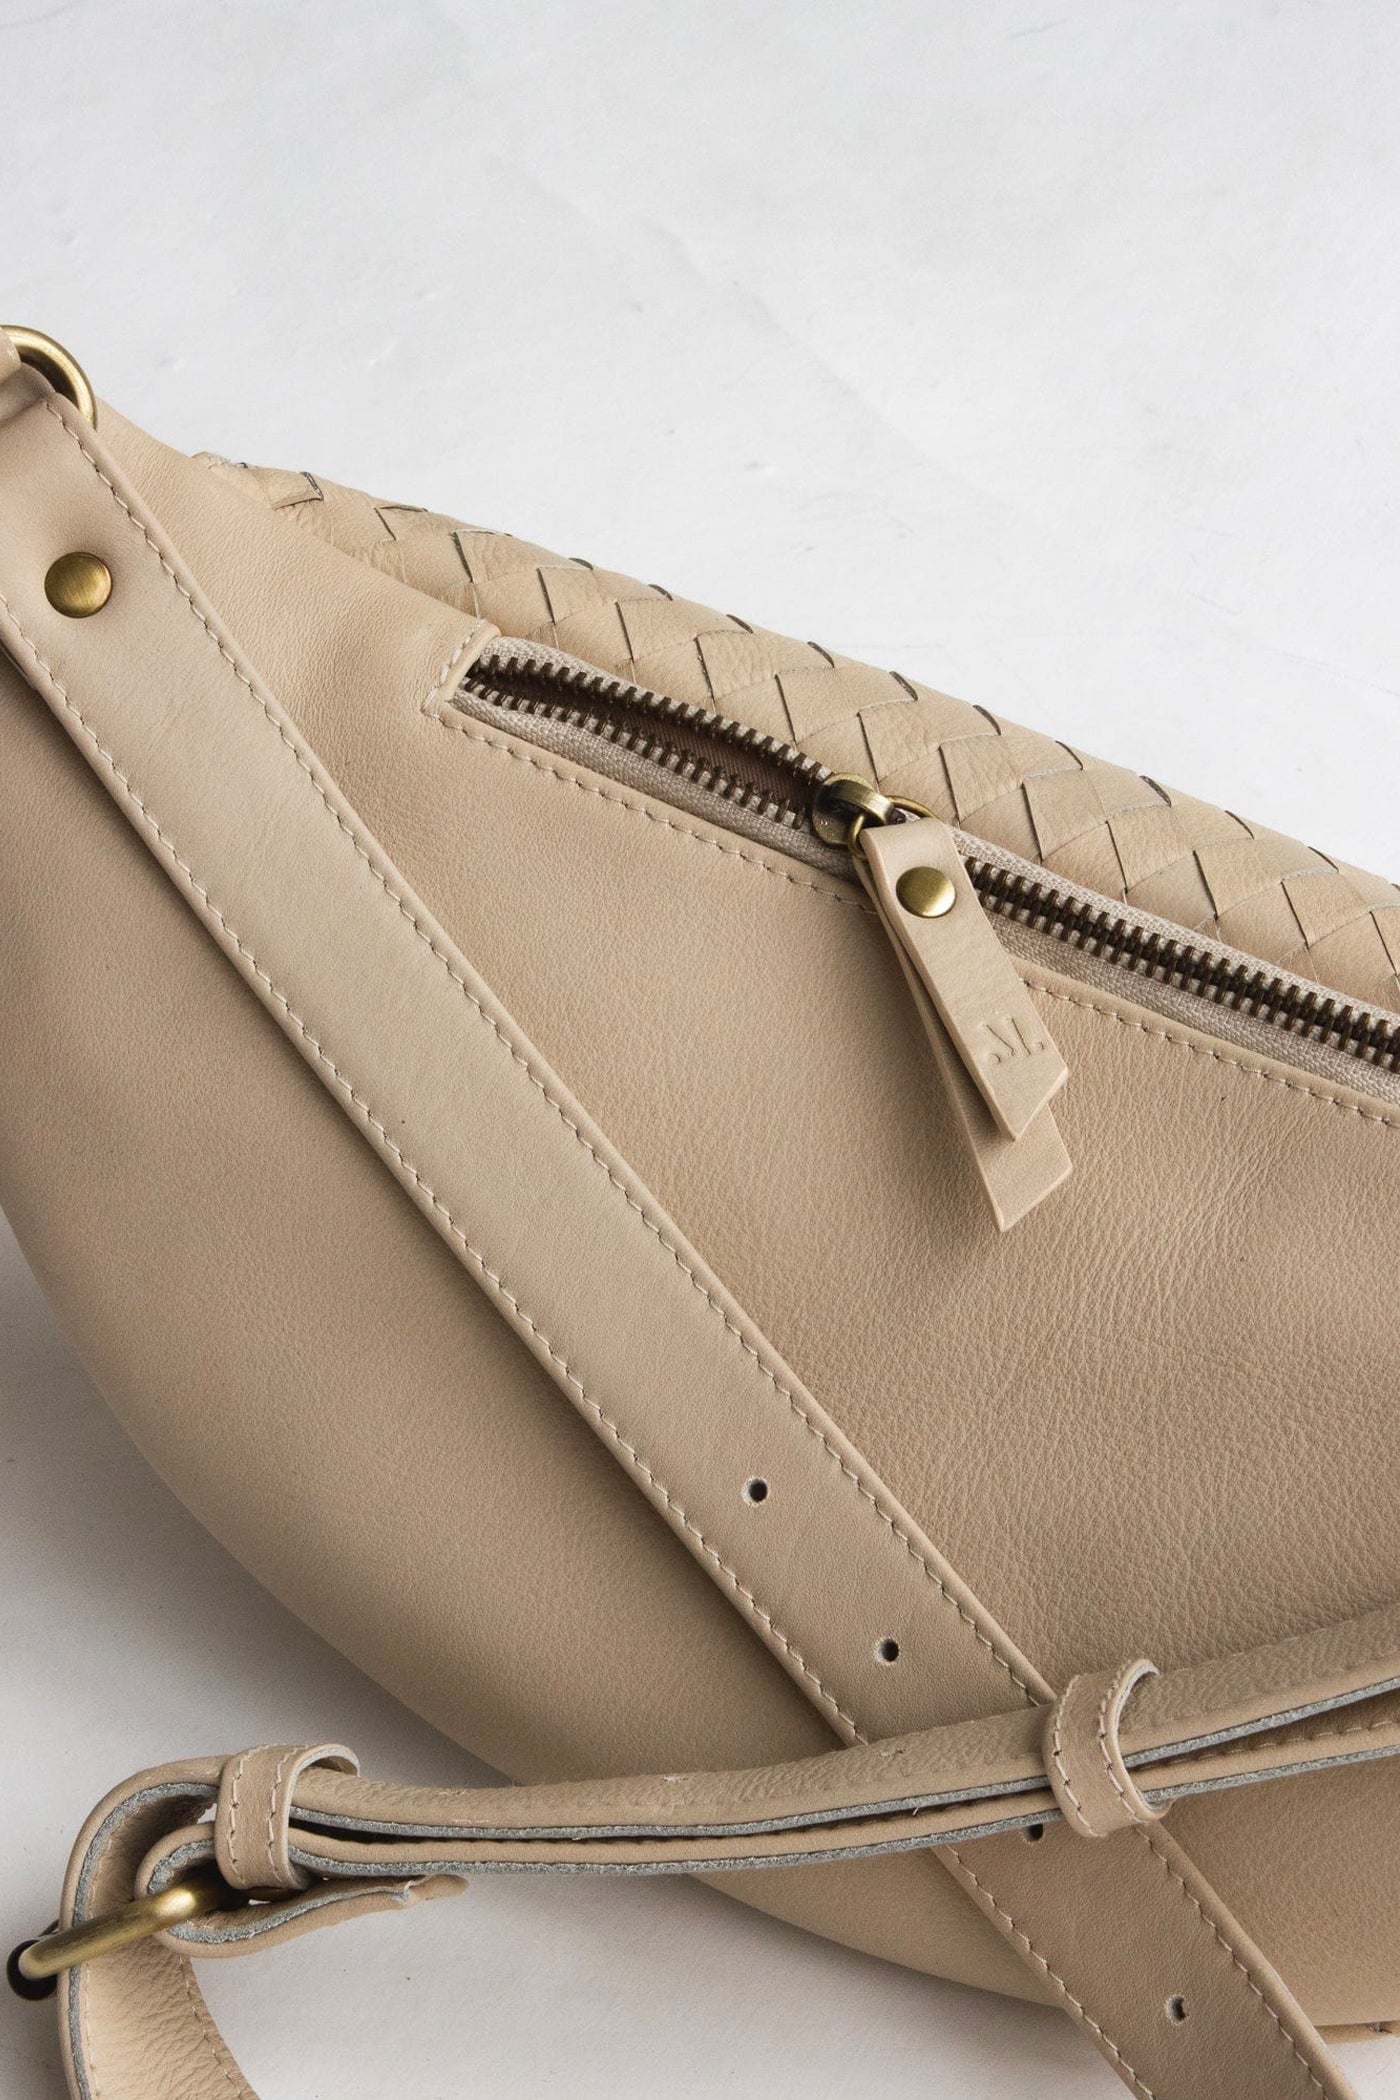 MANDRN Atlas Woven Leather Bag